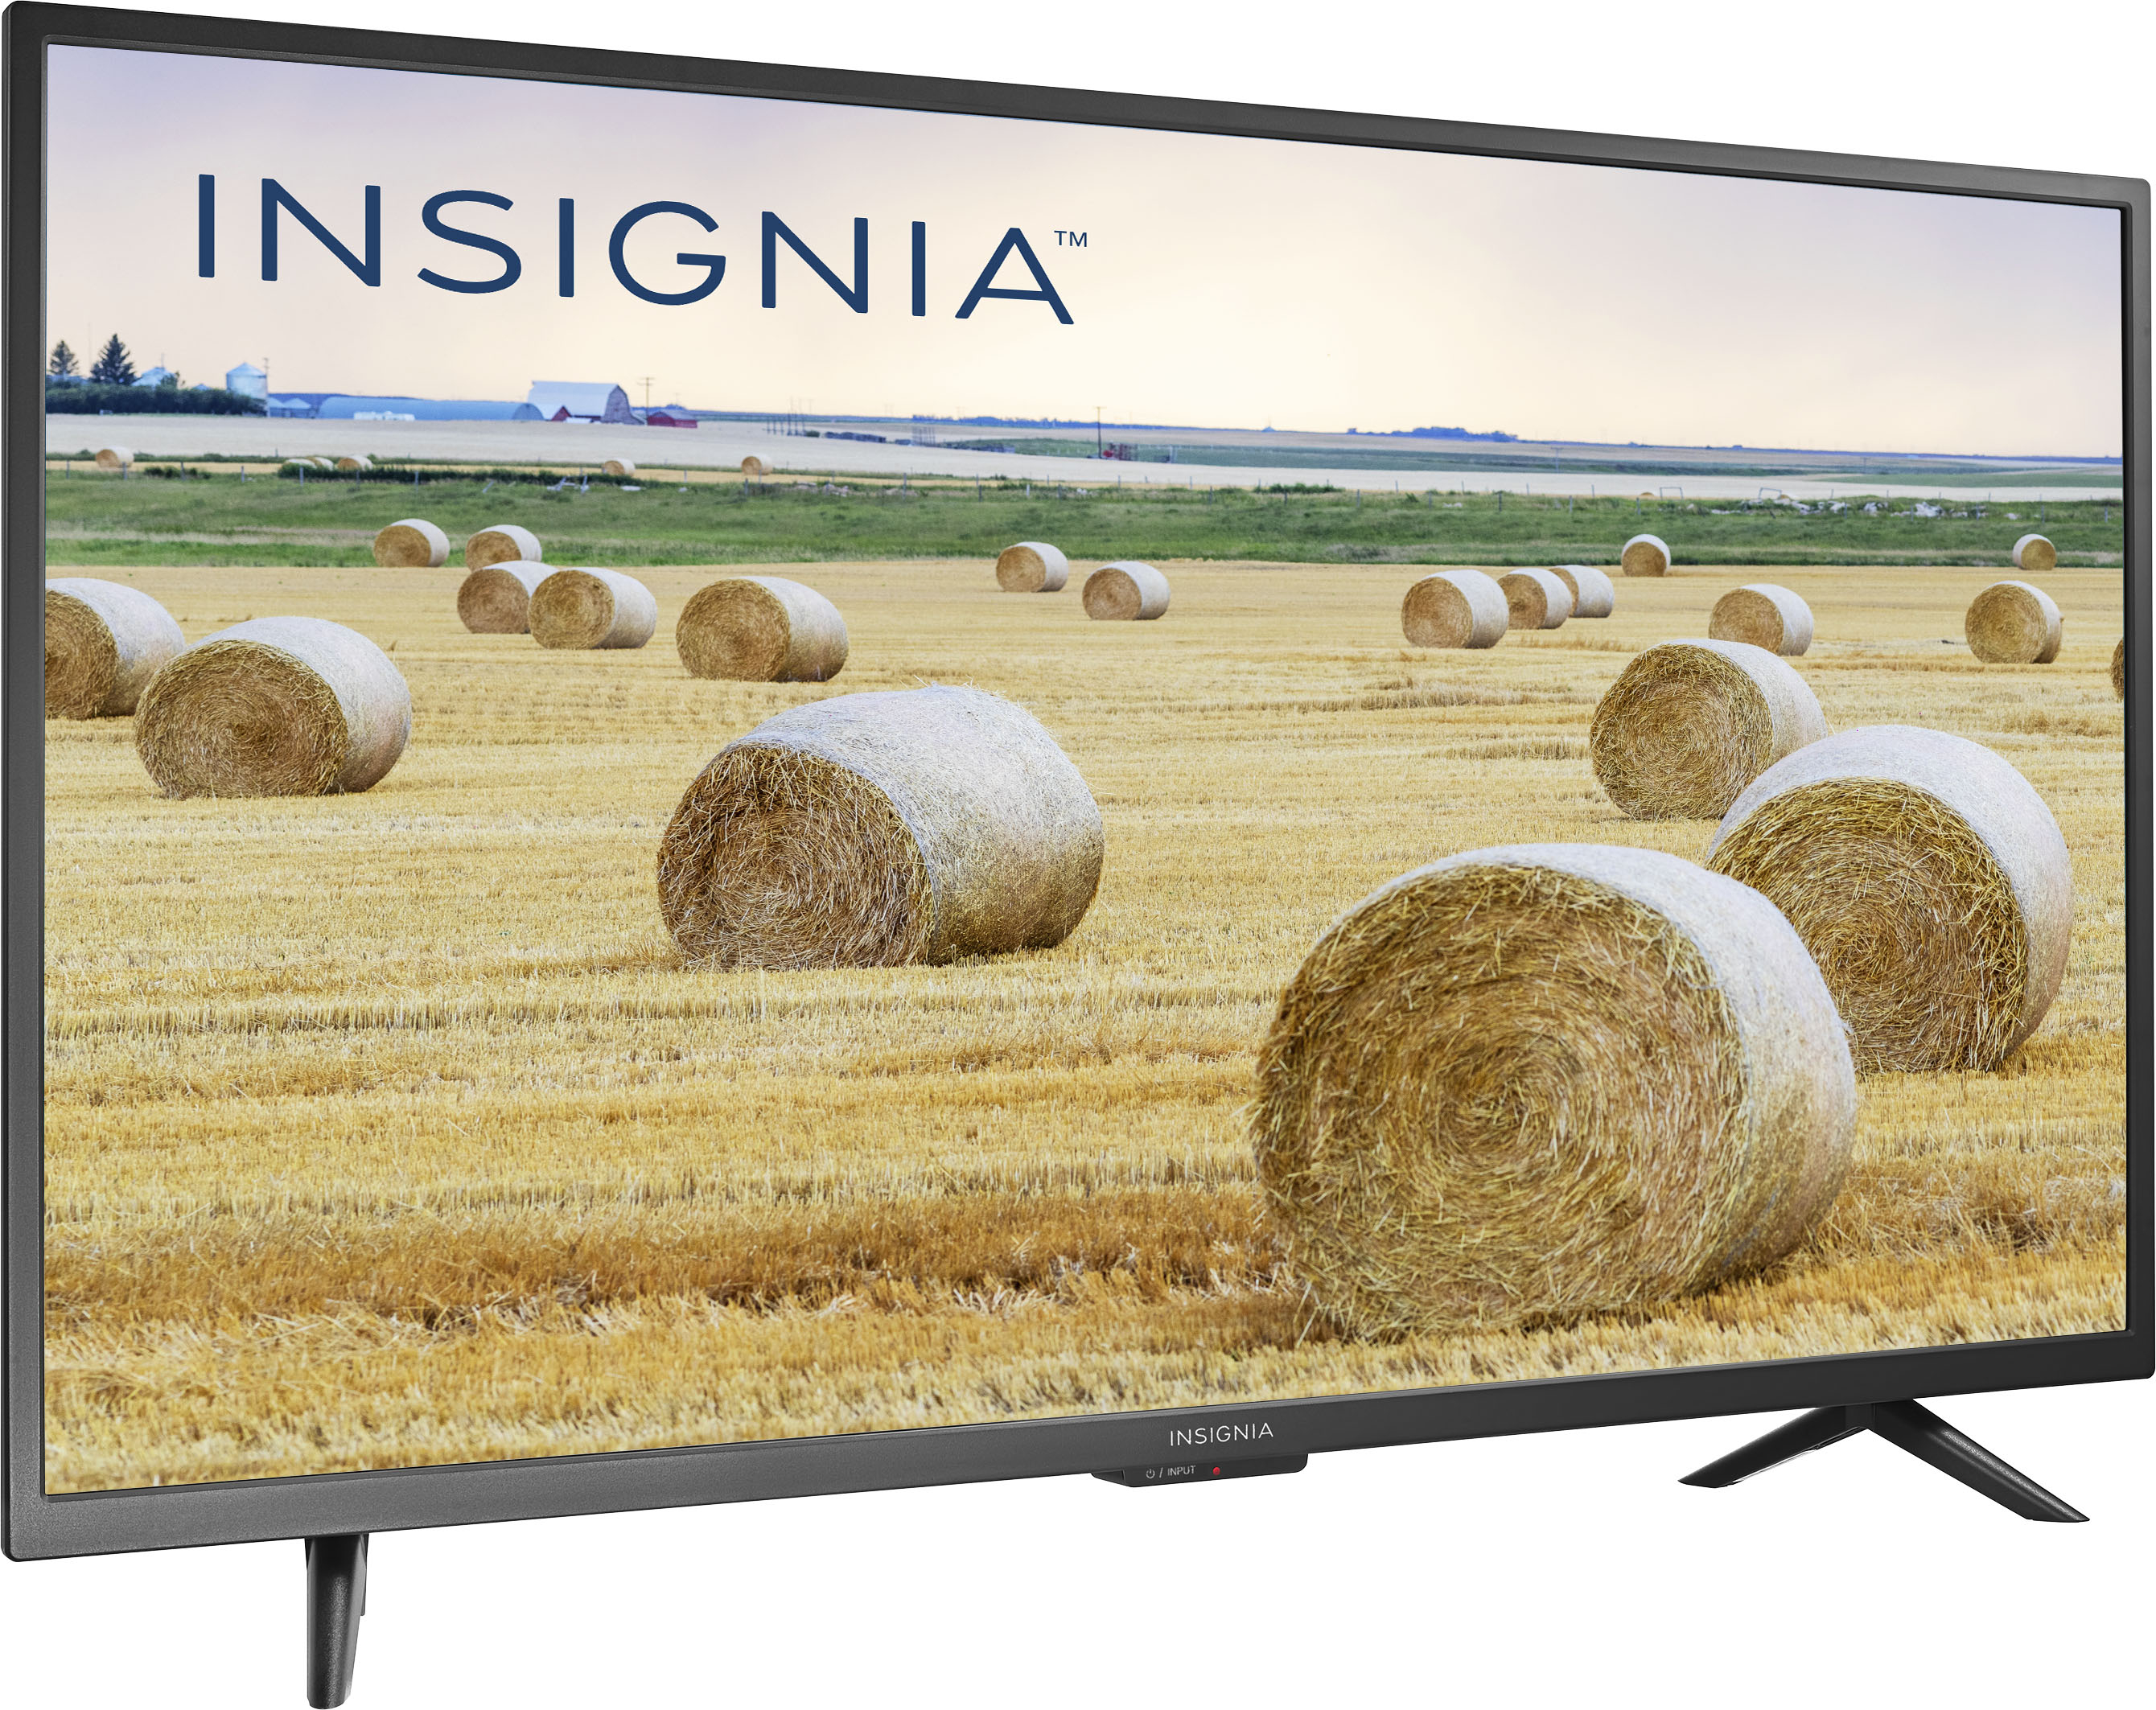 Insignia™ - 40" Class N10 Series LED Full HD TV - $149.99 + Free Shipping